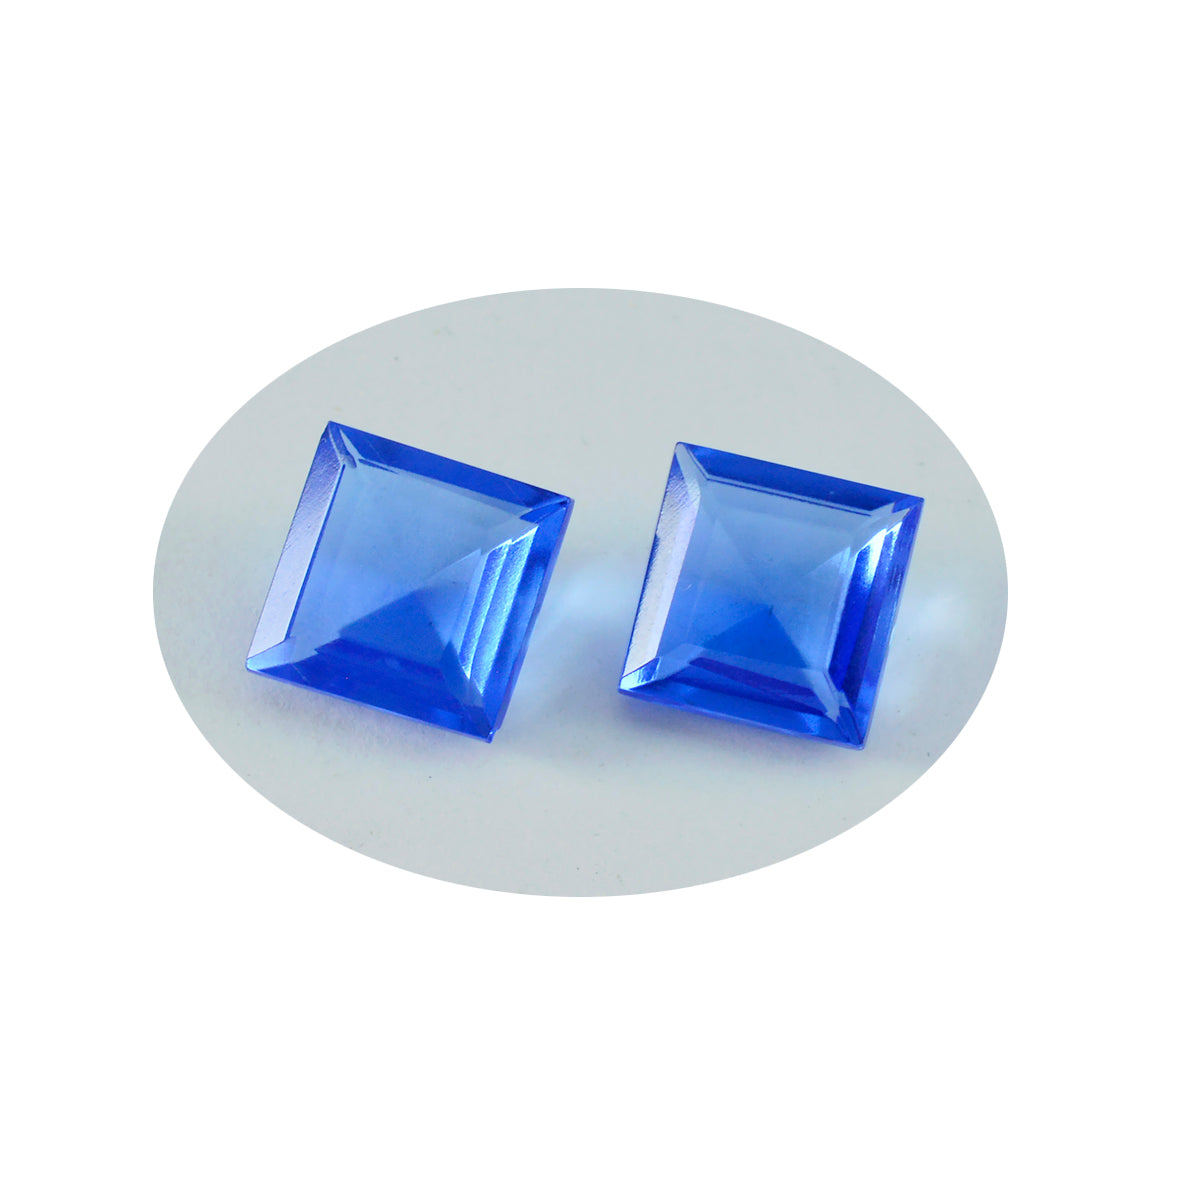 Riyogems 1PC Blue Sapphire CZ Faceted 13x13 mm Square Shape excellent Quality Loose Gemstone